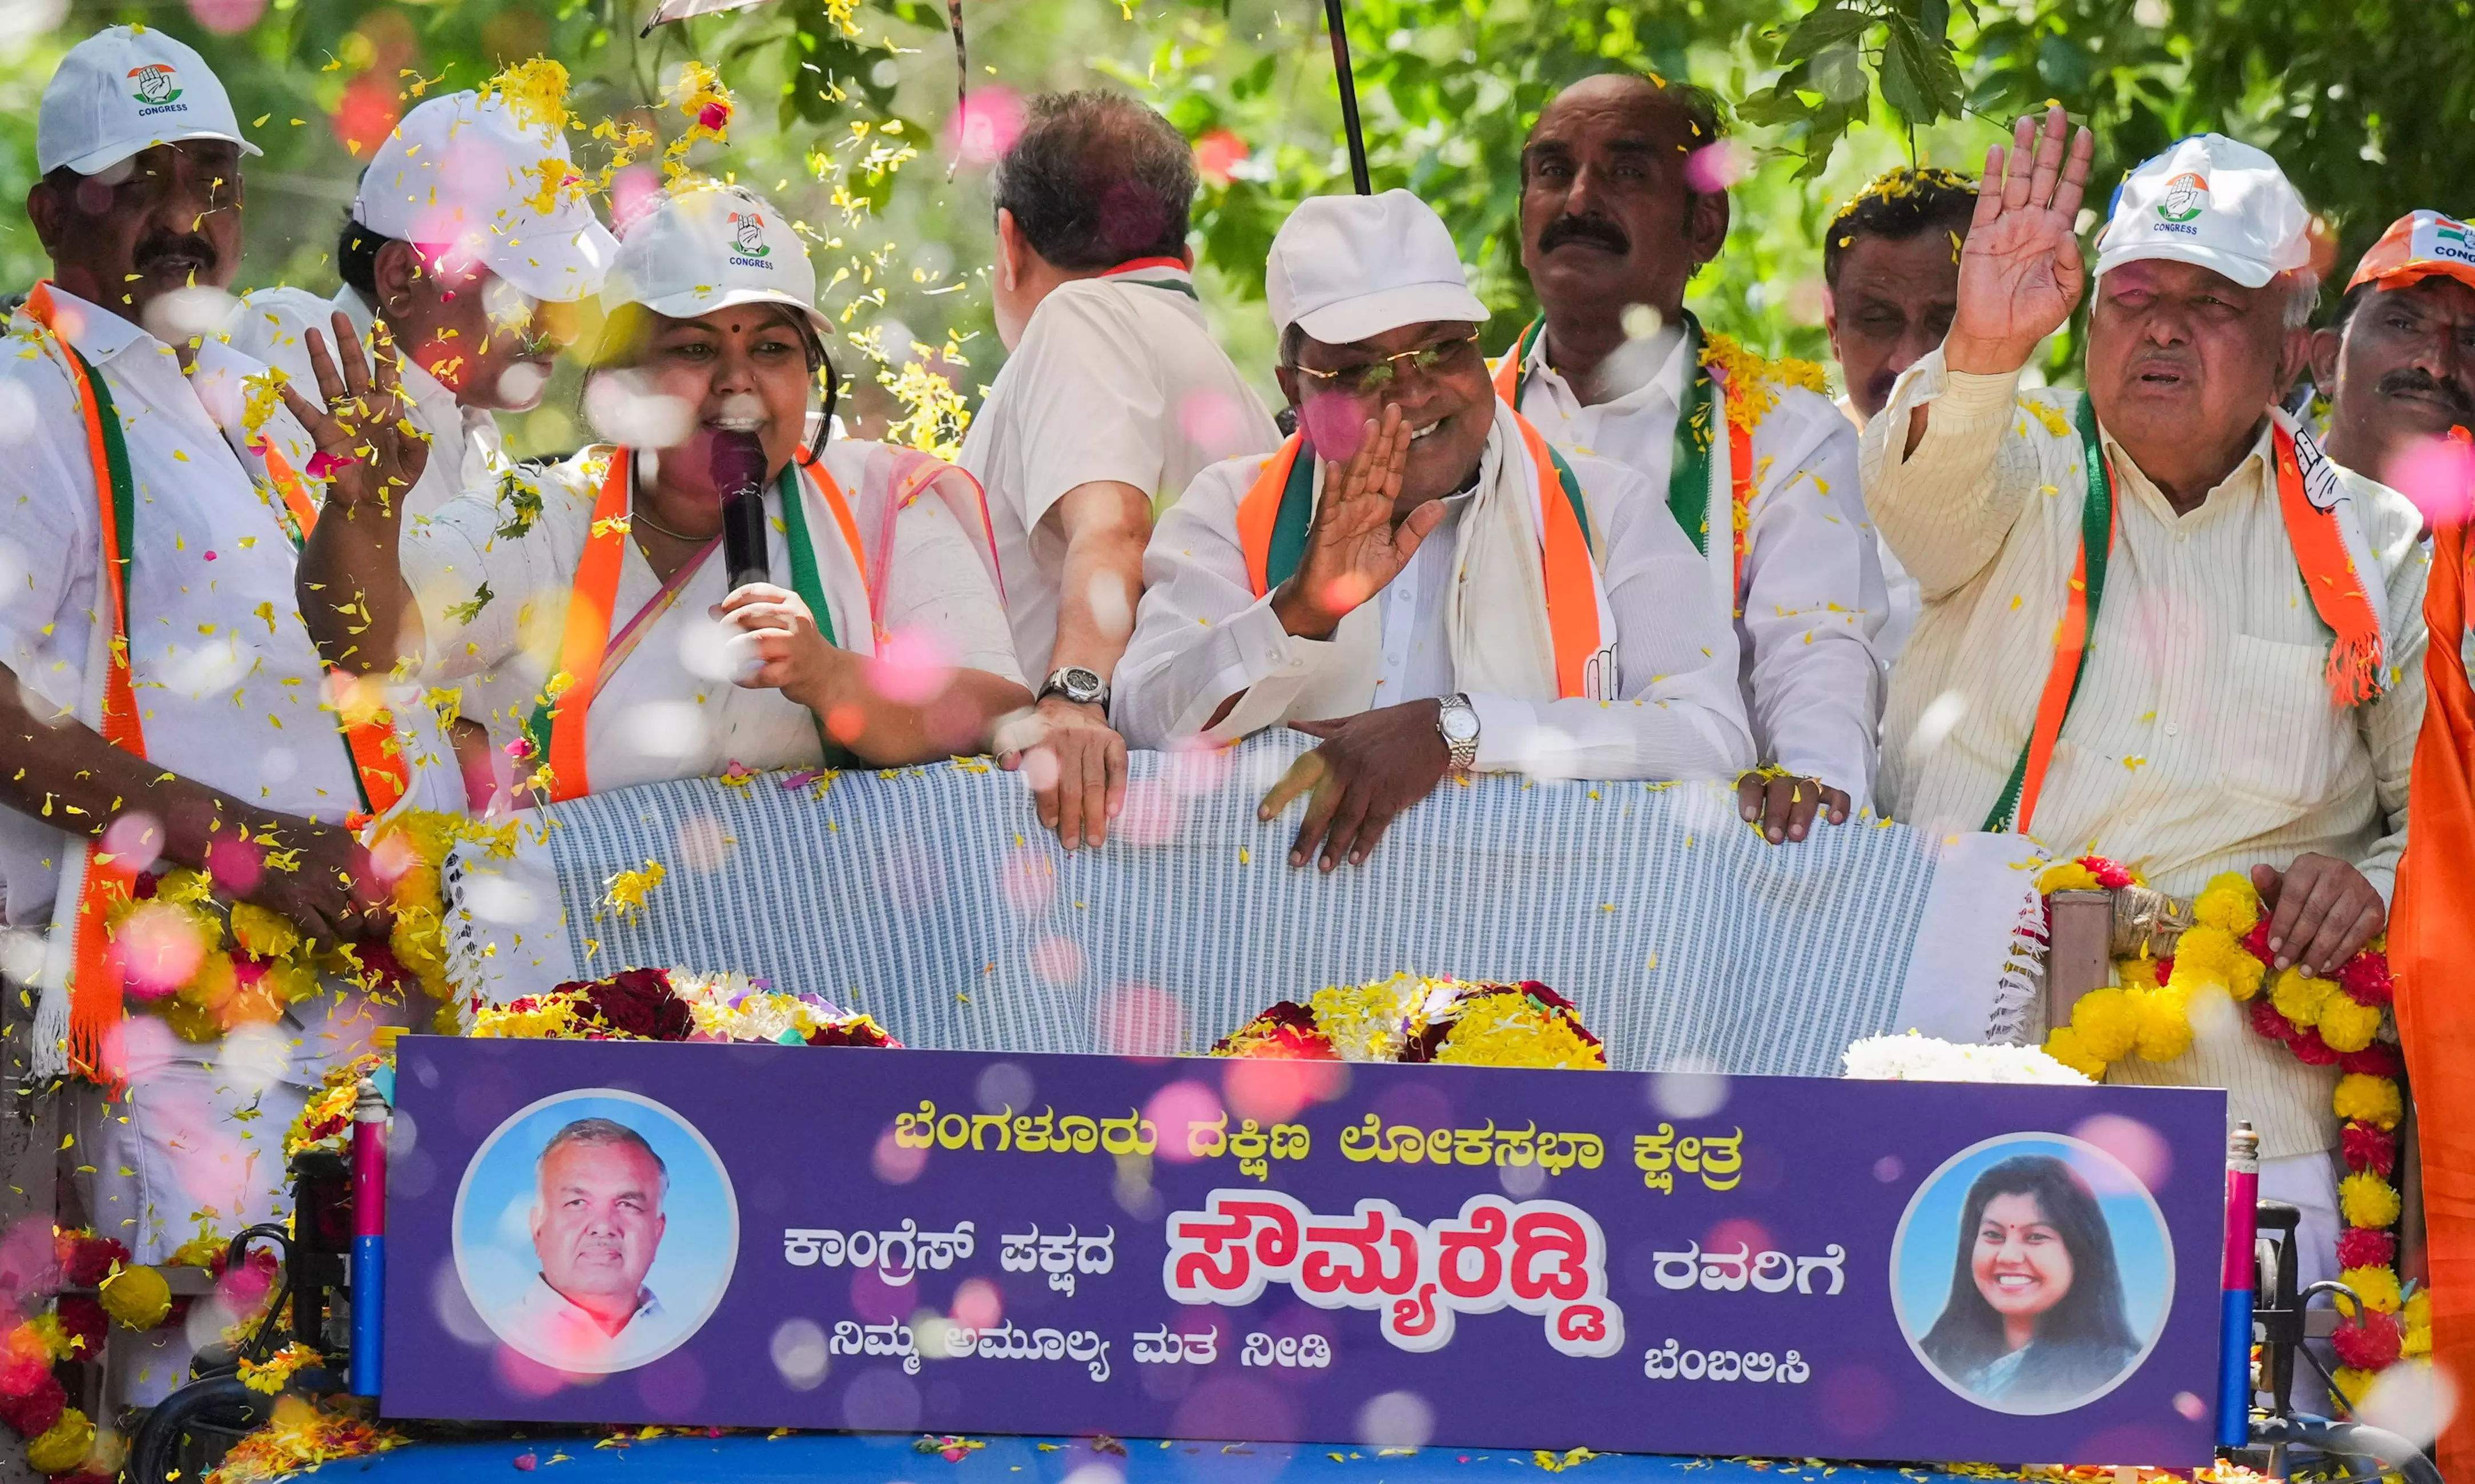 No Modi wave, only enthusiasm for Congress guarantees: Karnataka CM Siddaramaiah